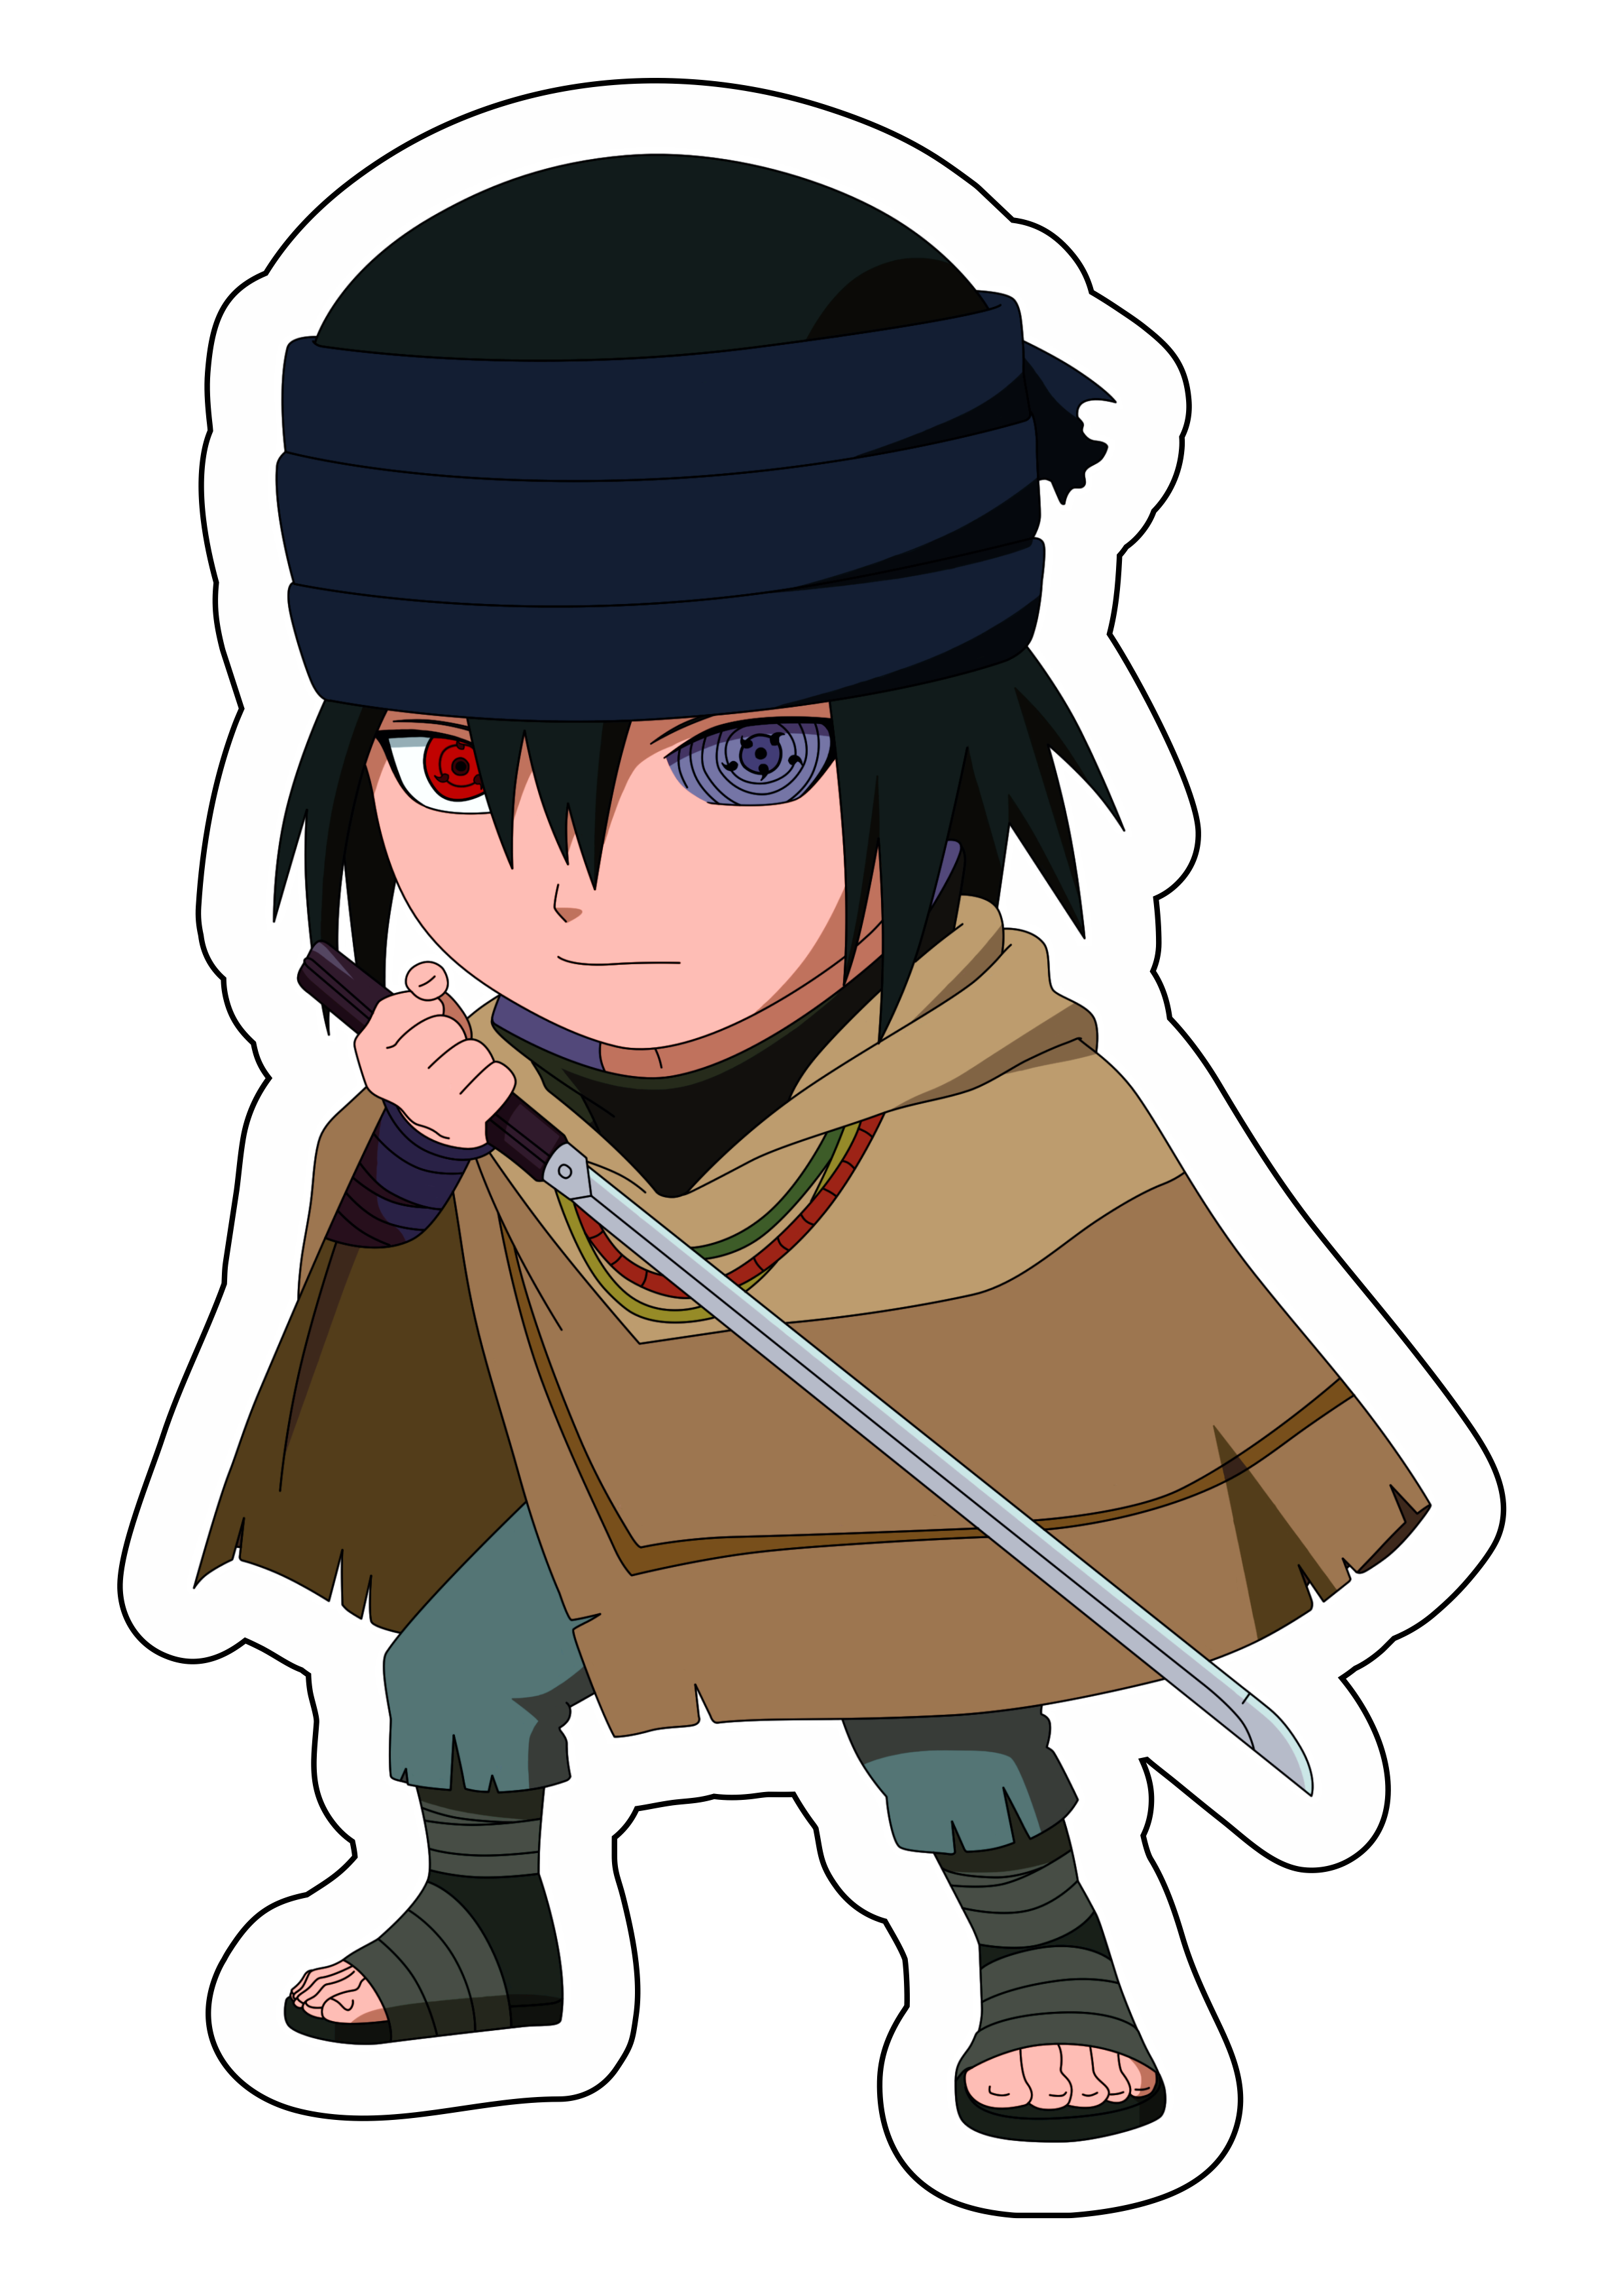 Naruto Shippuden cute chibi Sasuke marca da maldição Orochimaru Sharingam  ninja vila oculta da folha desenho infantil anime design png